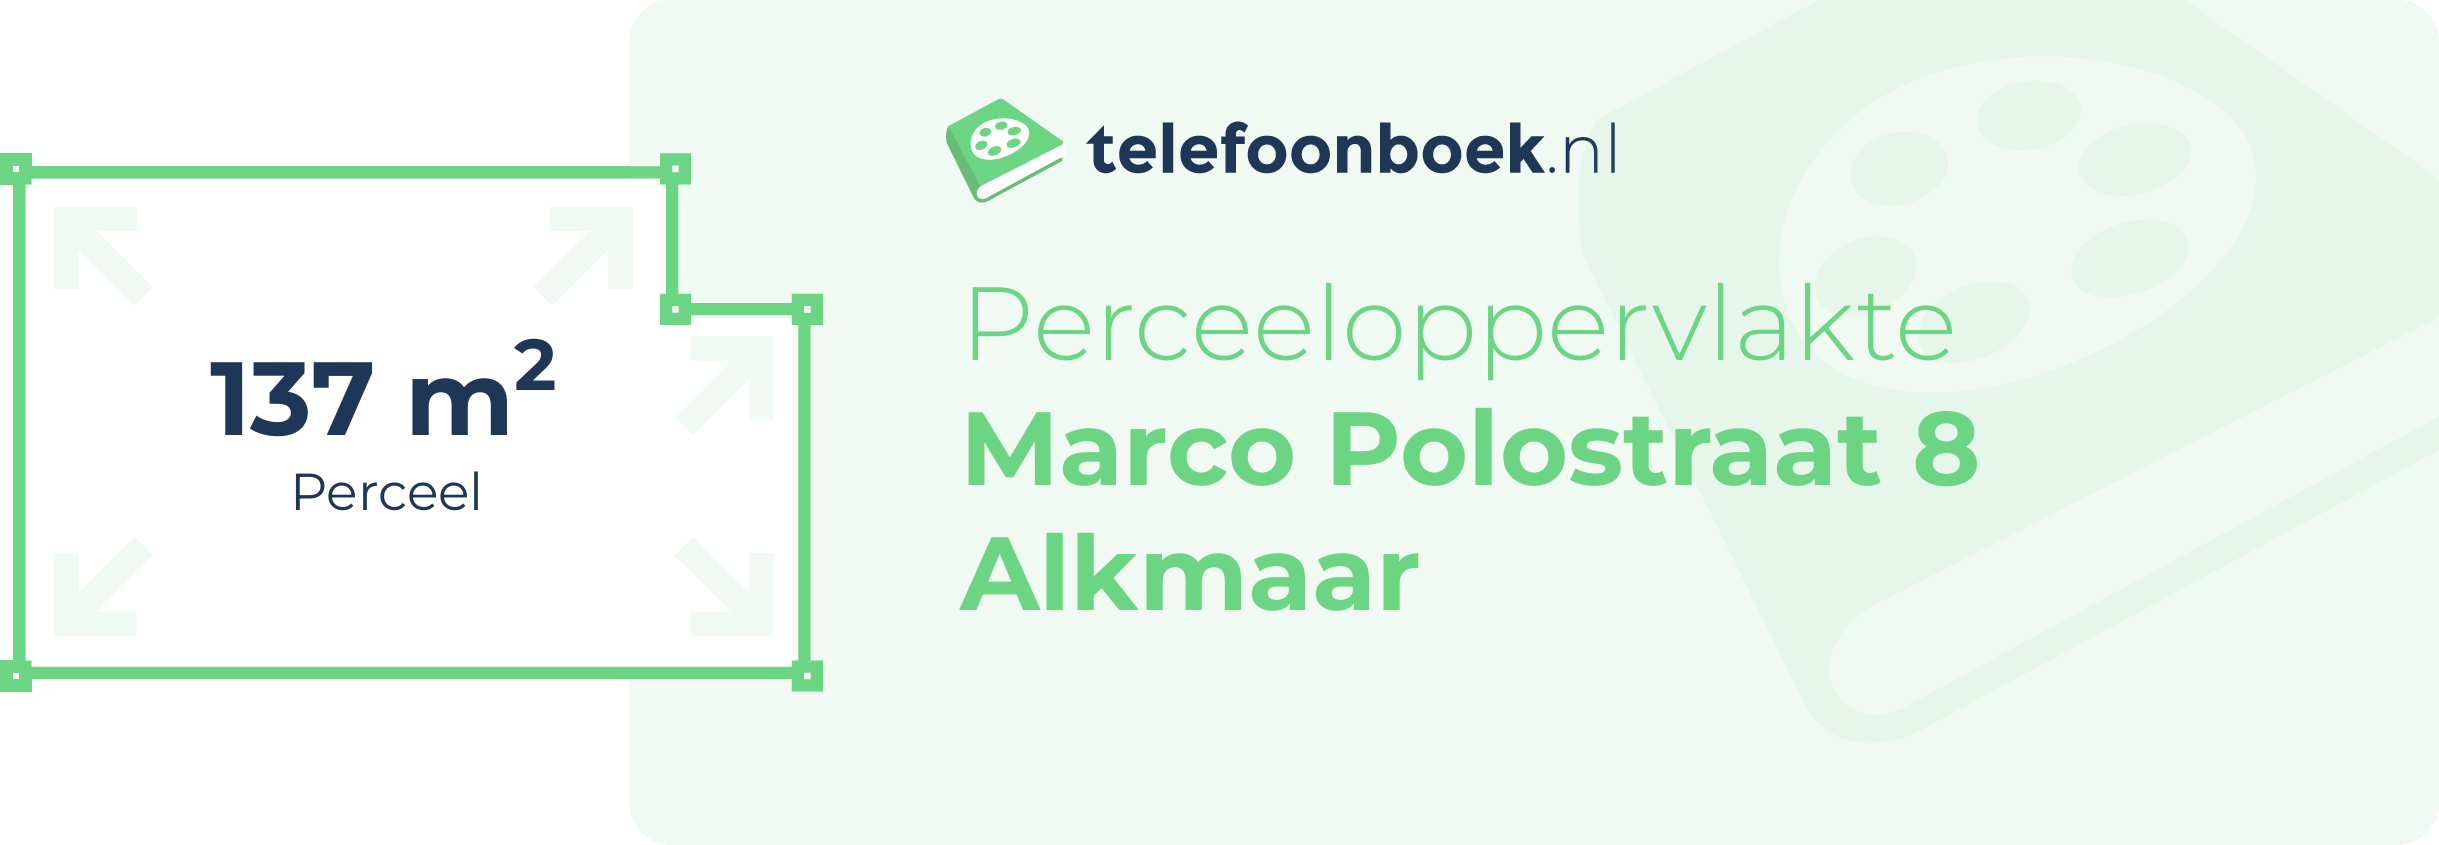 Perceeloppervlakte Marco Polostraat 8 Alkmaar